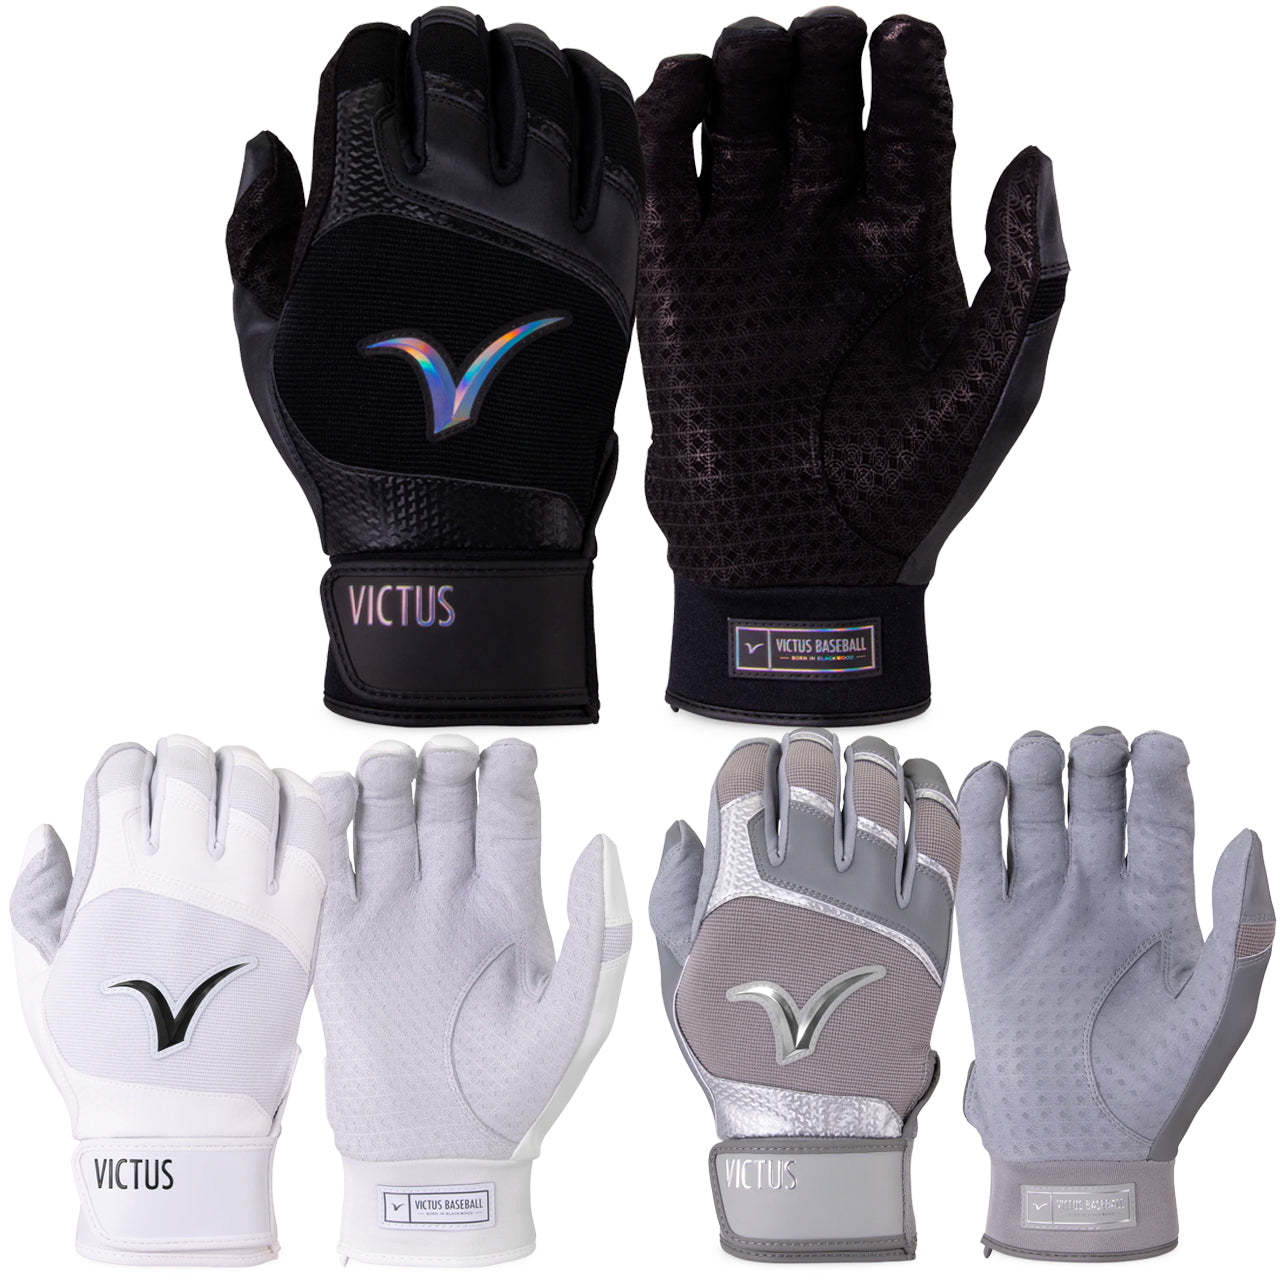 Victus Sports The Debut 2.0 Adult Batting Gloves (Multiple Colors): VBG2